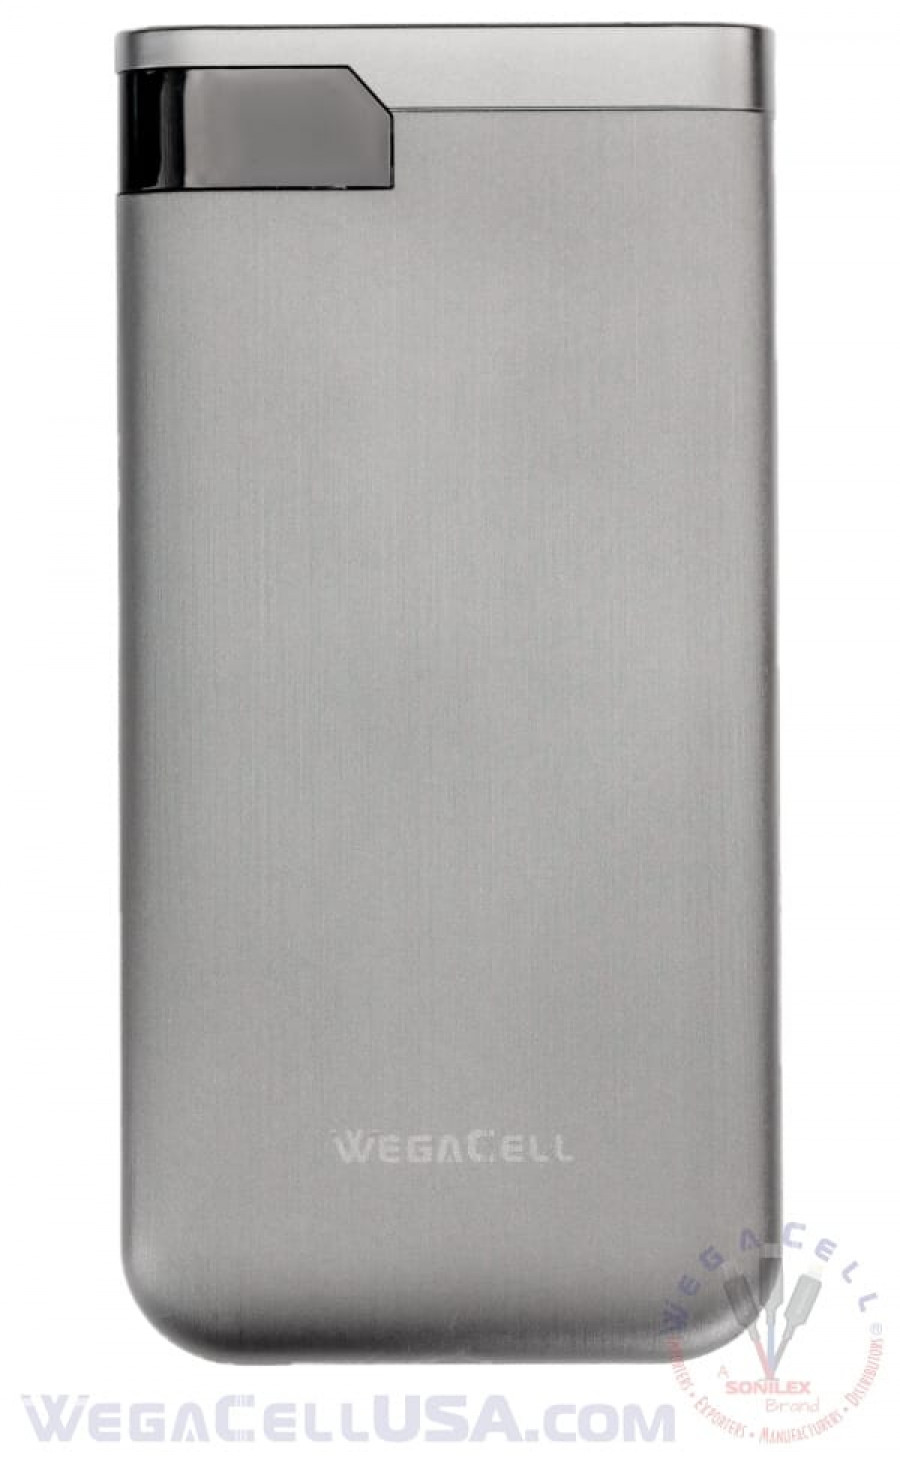 8000 mah power bank fast charging lithium-polymer portable battery pack - wholesale pkg. wegacell: wl-2usb14-pb powerbank 22